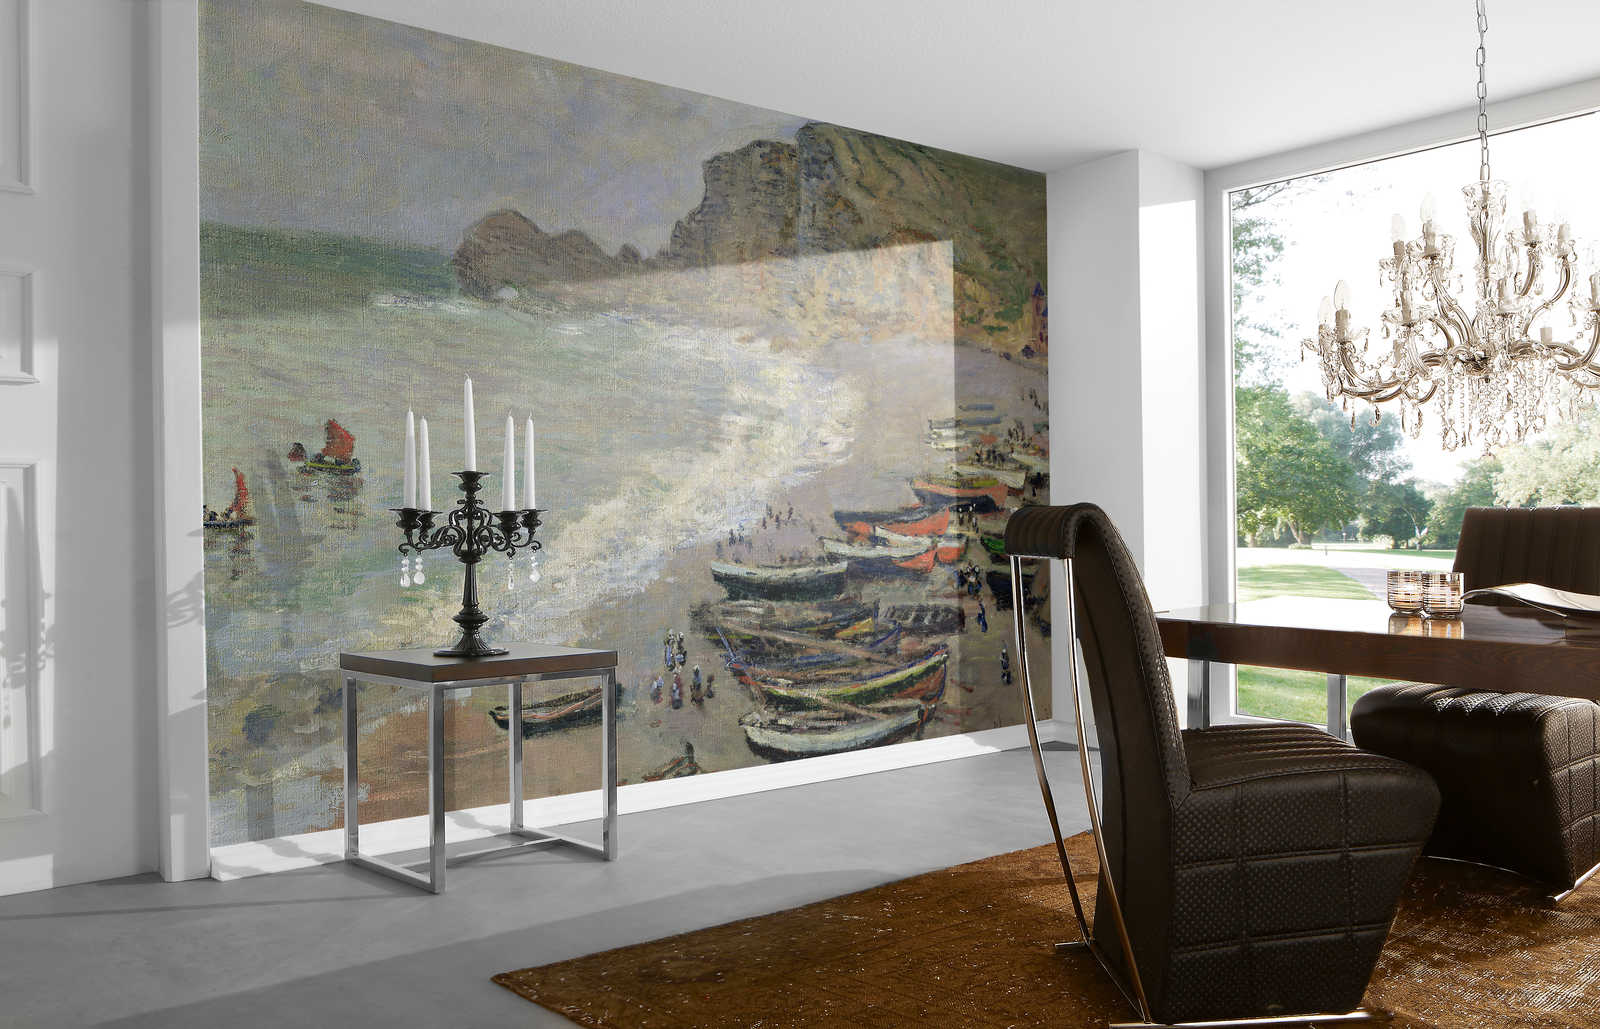             Photo wallpaper "Etretat, beach and the Porte d'Amont" by Claude Monet
        